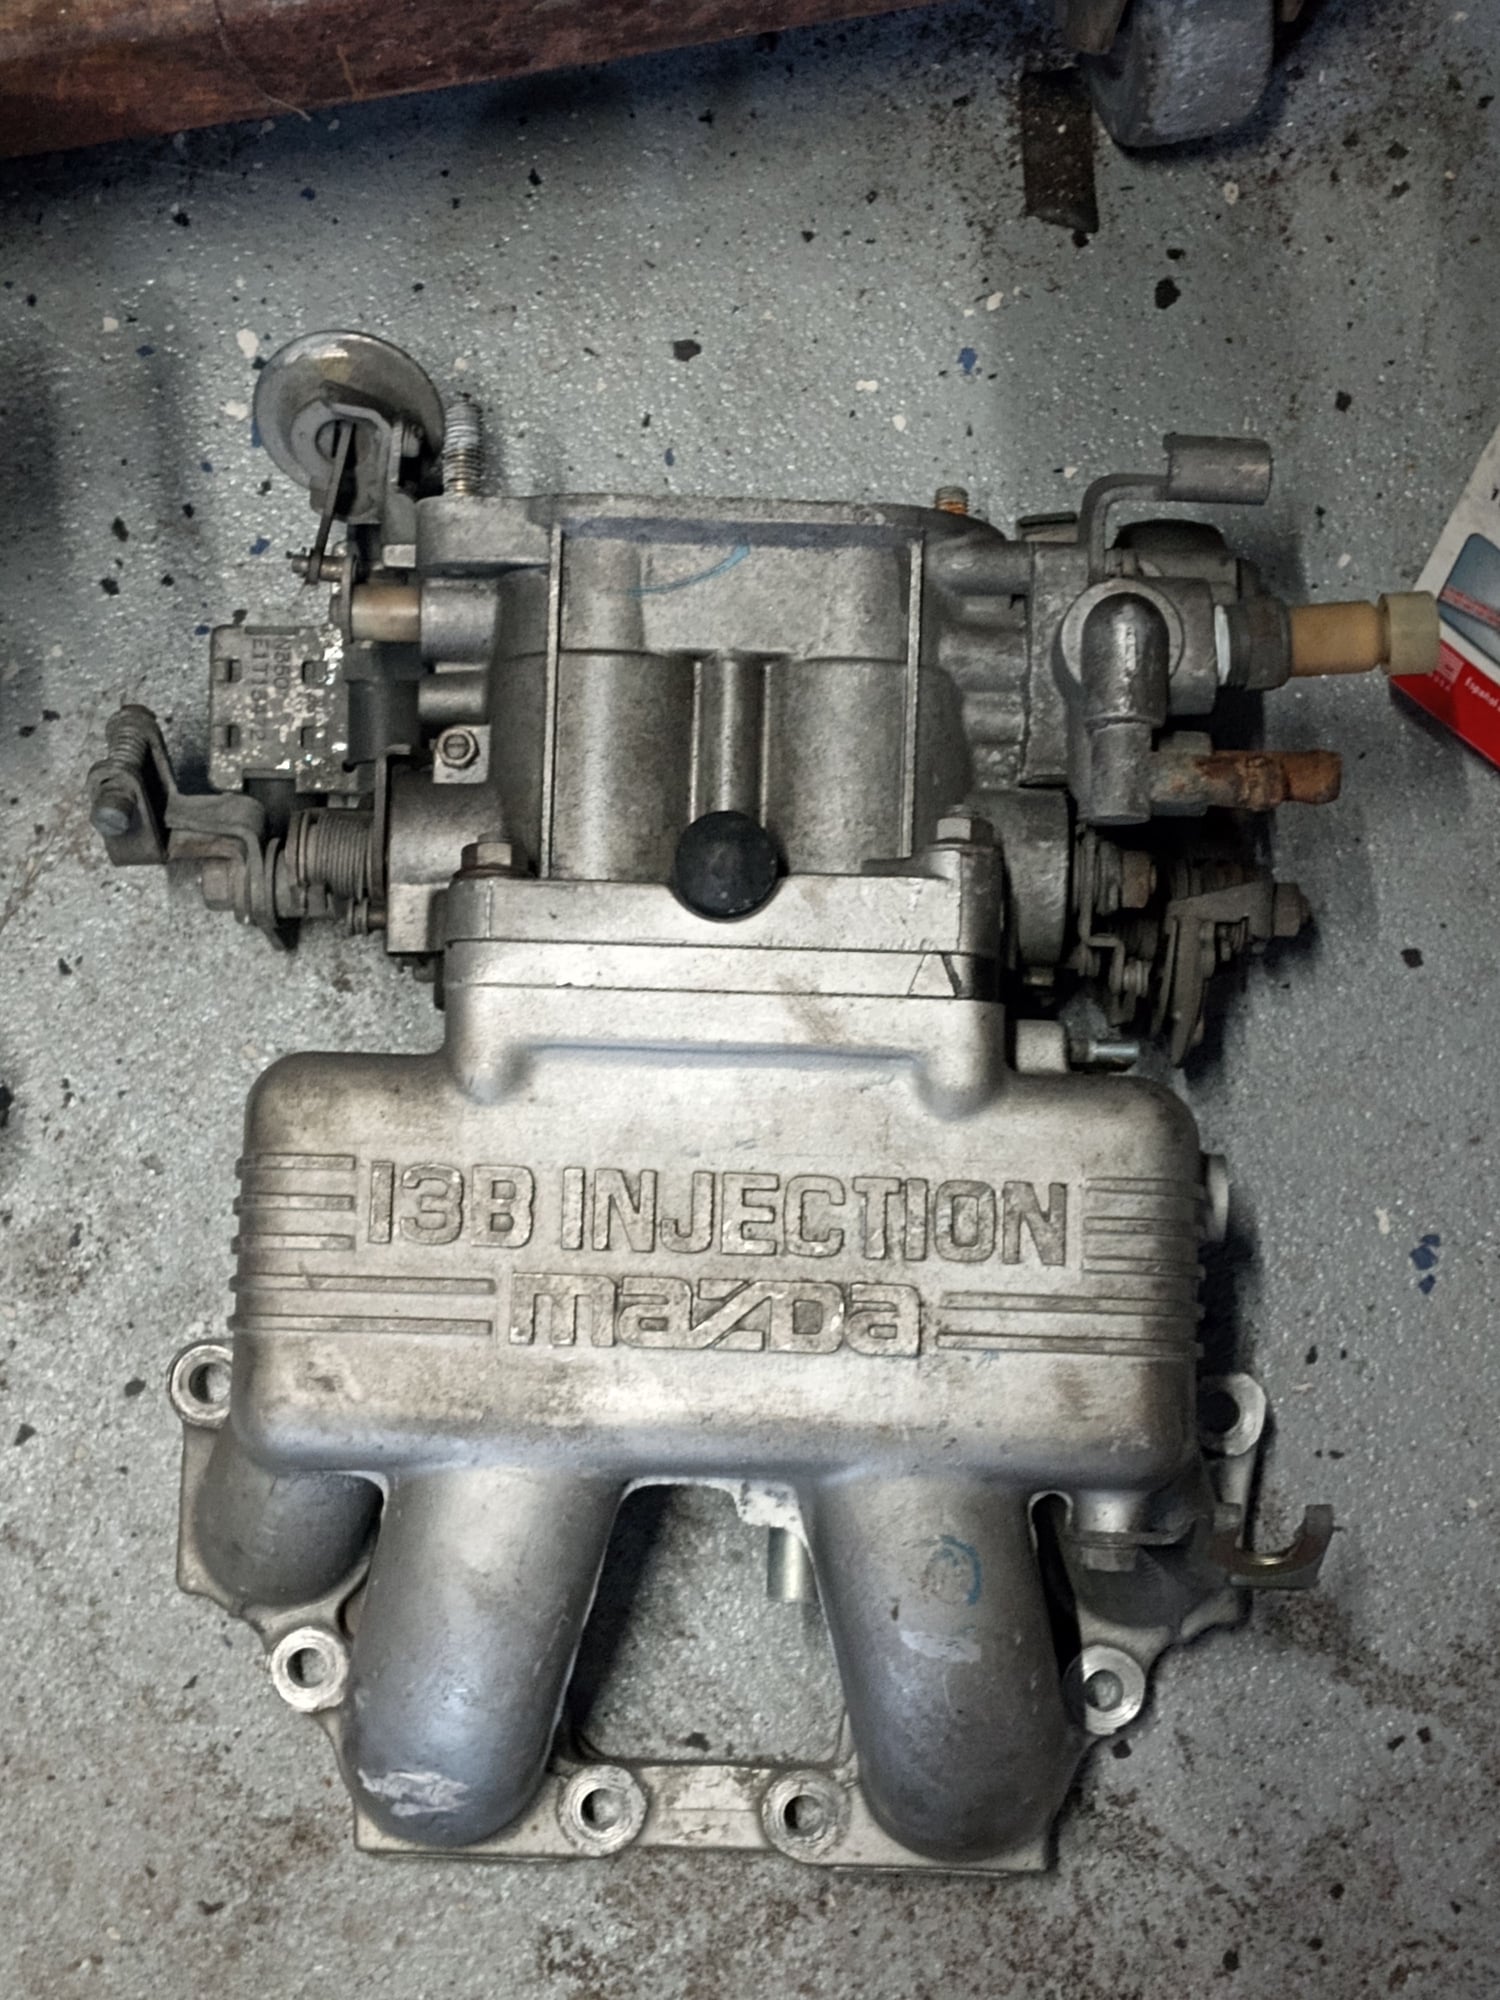 Engine - Intake/Fuel - Second gen intake manifold - Used - 1986 to 1991 Mazda RX-7 - Lancaster, PA 17022, United States